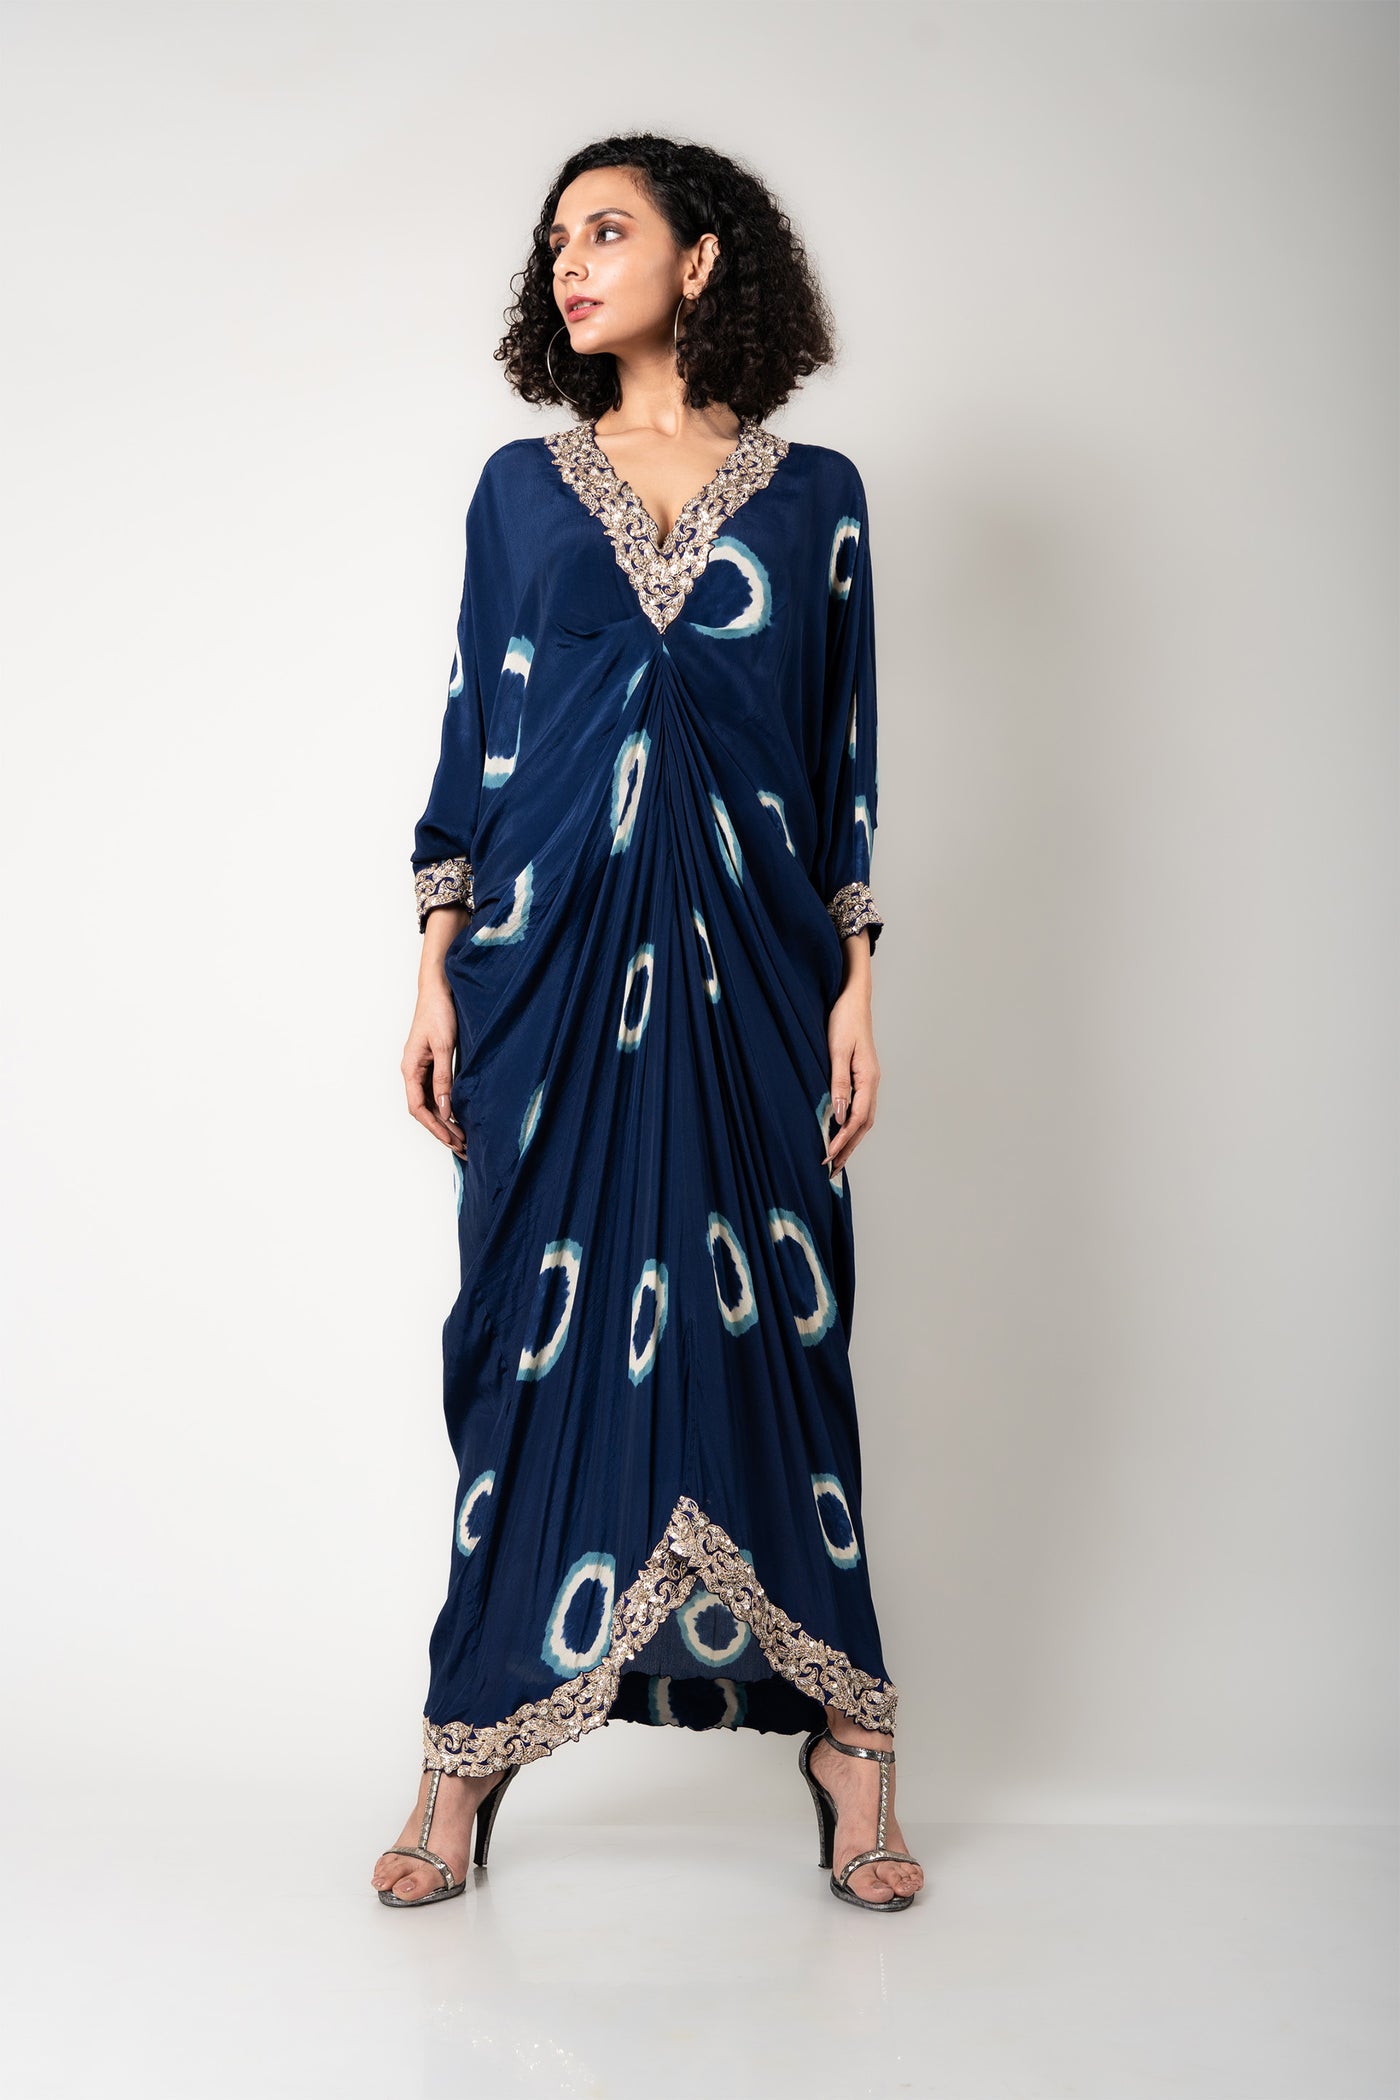 Nupur Kanoi Rekha Dress blue off white festive fusion indian designer wear online shopping melange singapore